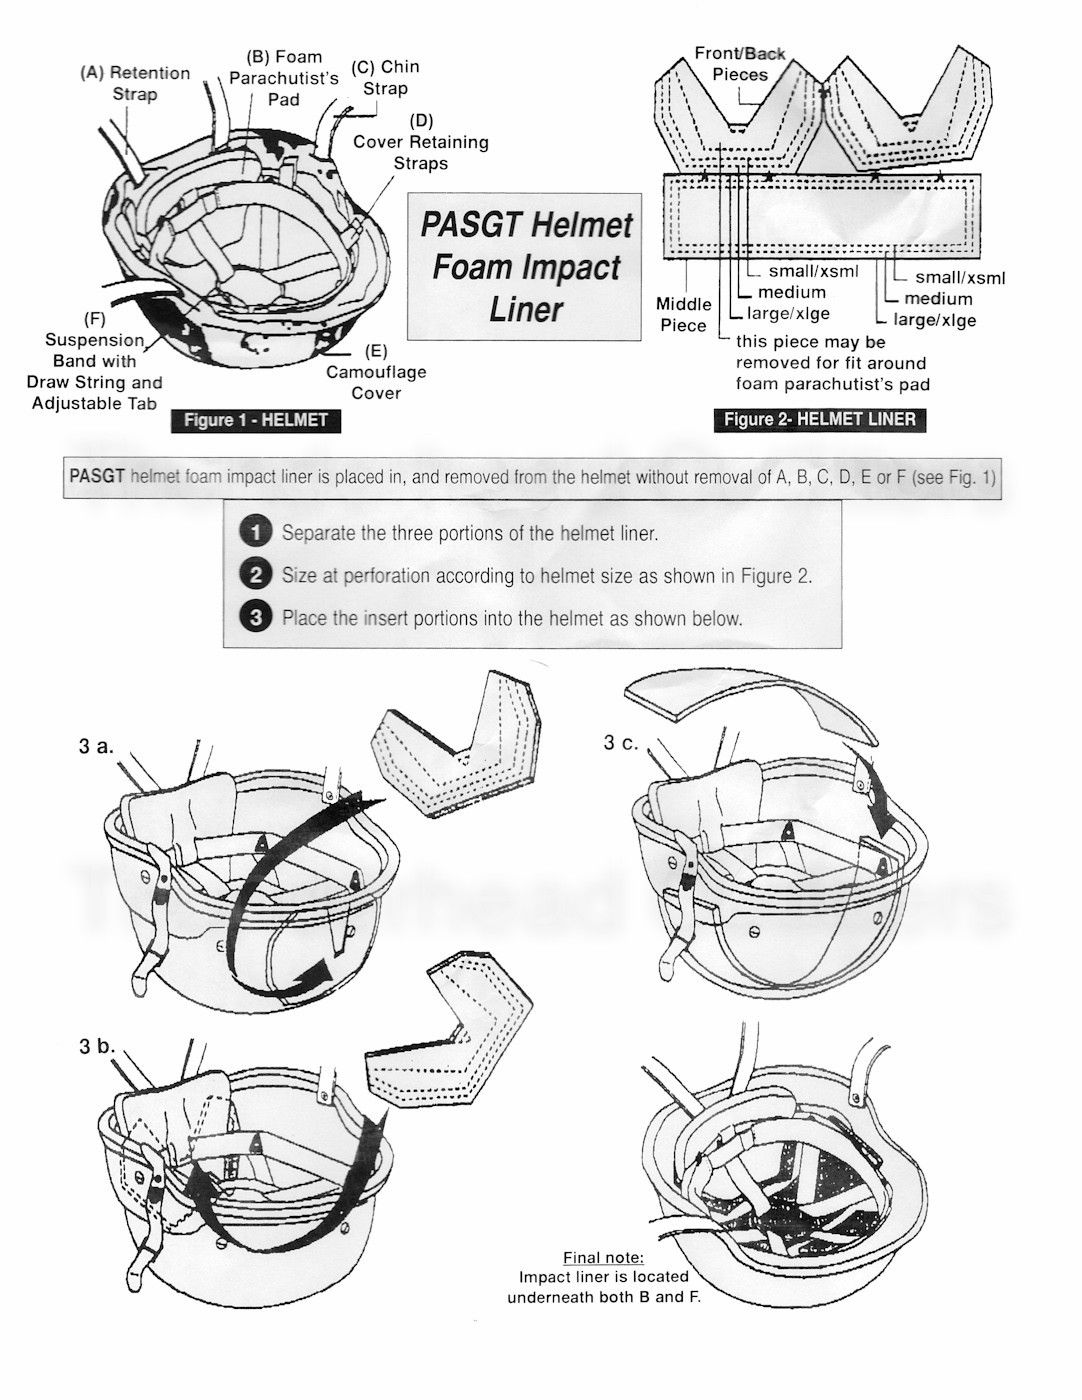 instruction for PASGT helmet parachutists impact liner